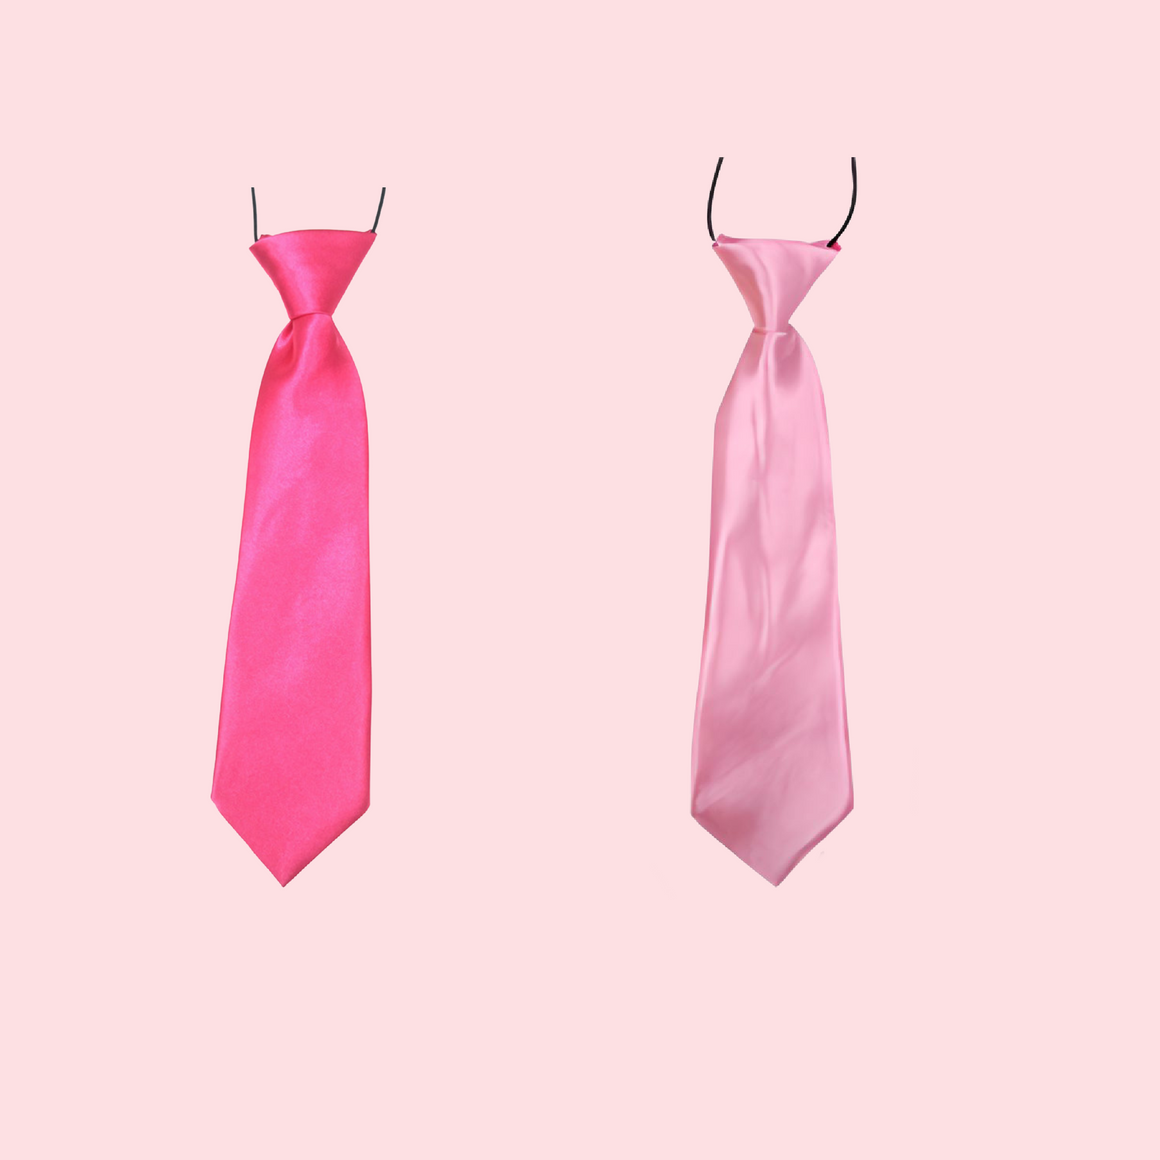 Large Pink Pet Neck Ties